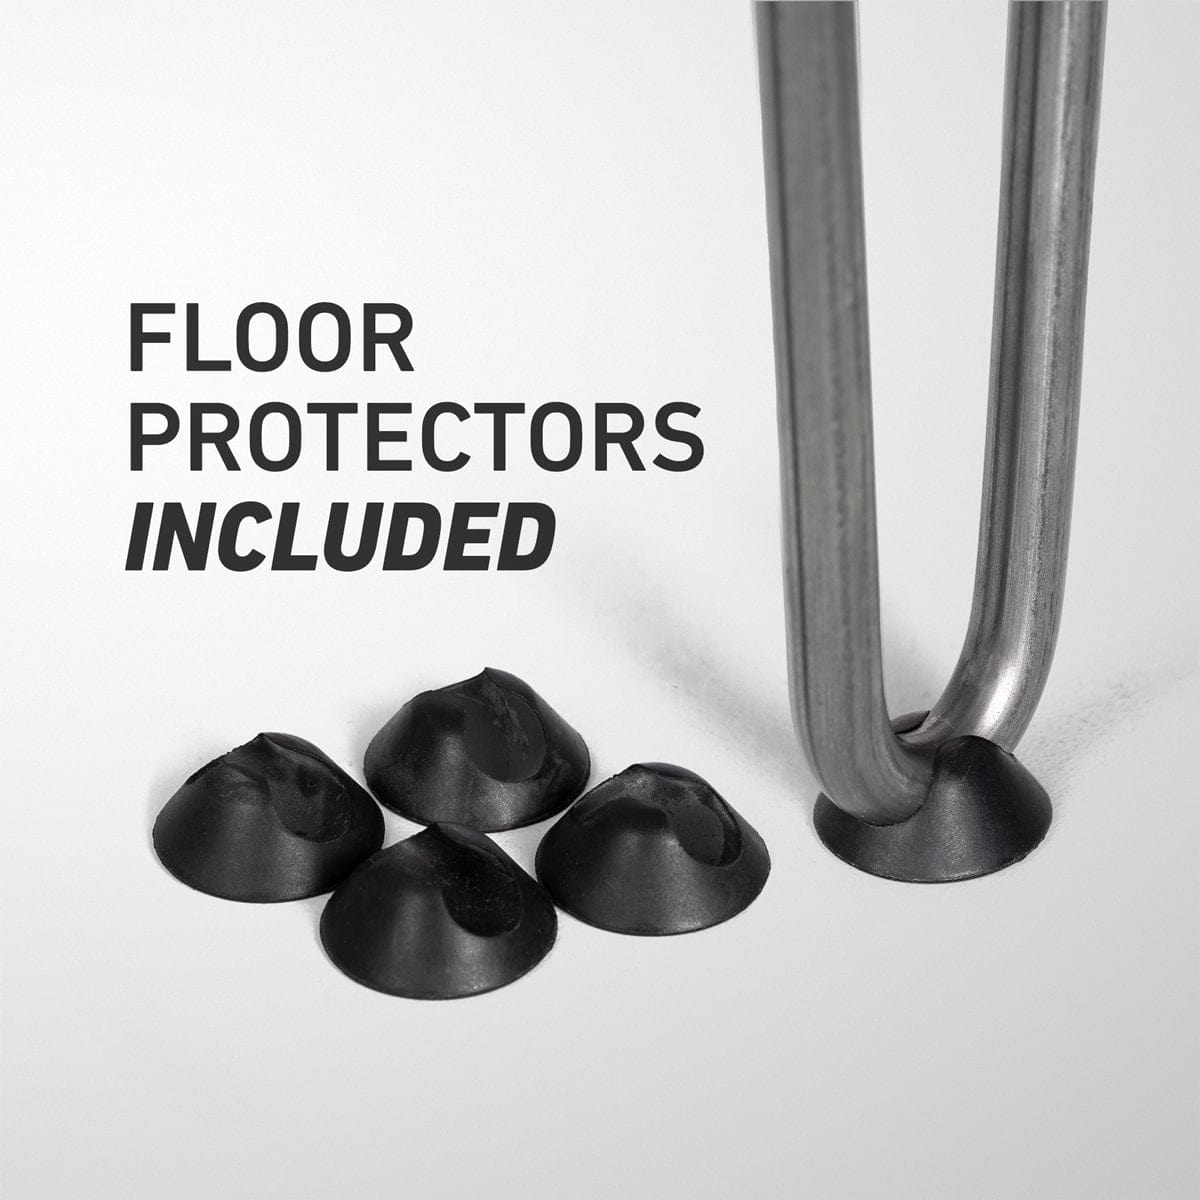 Rubber floor protectors for hairpin legs